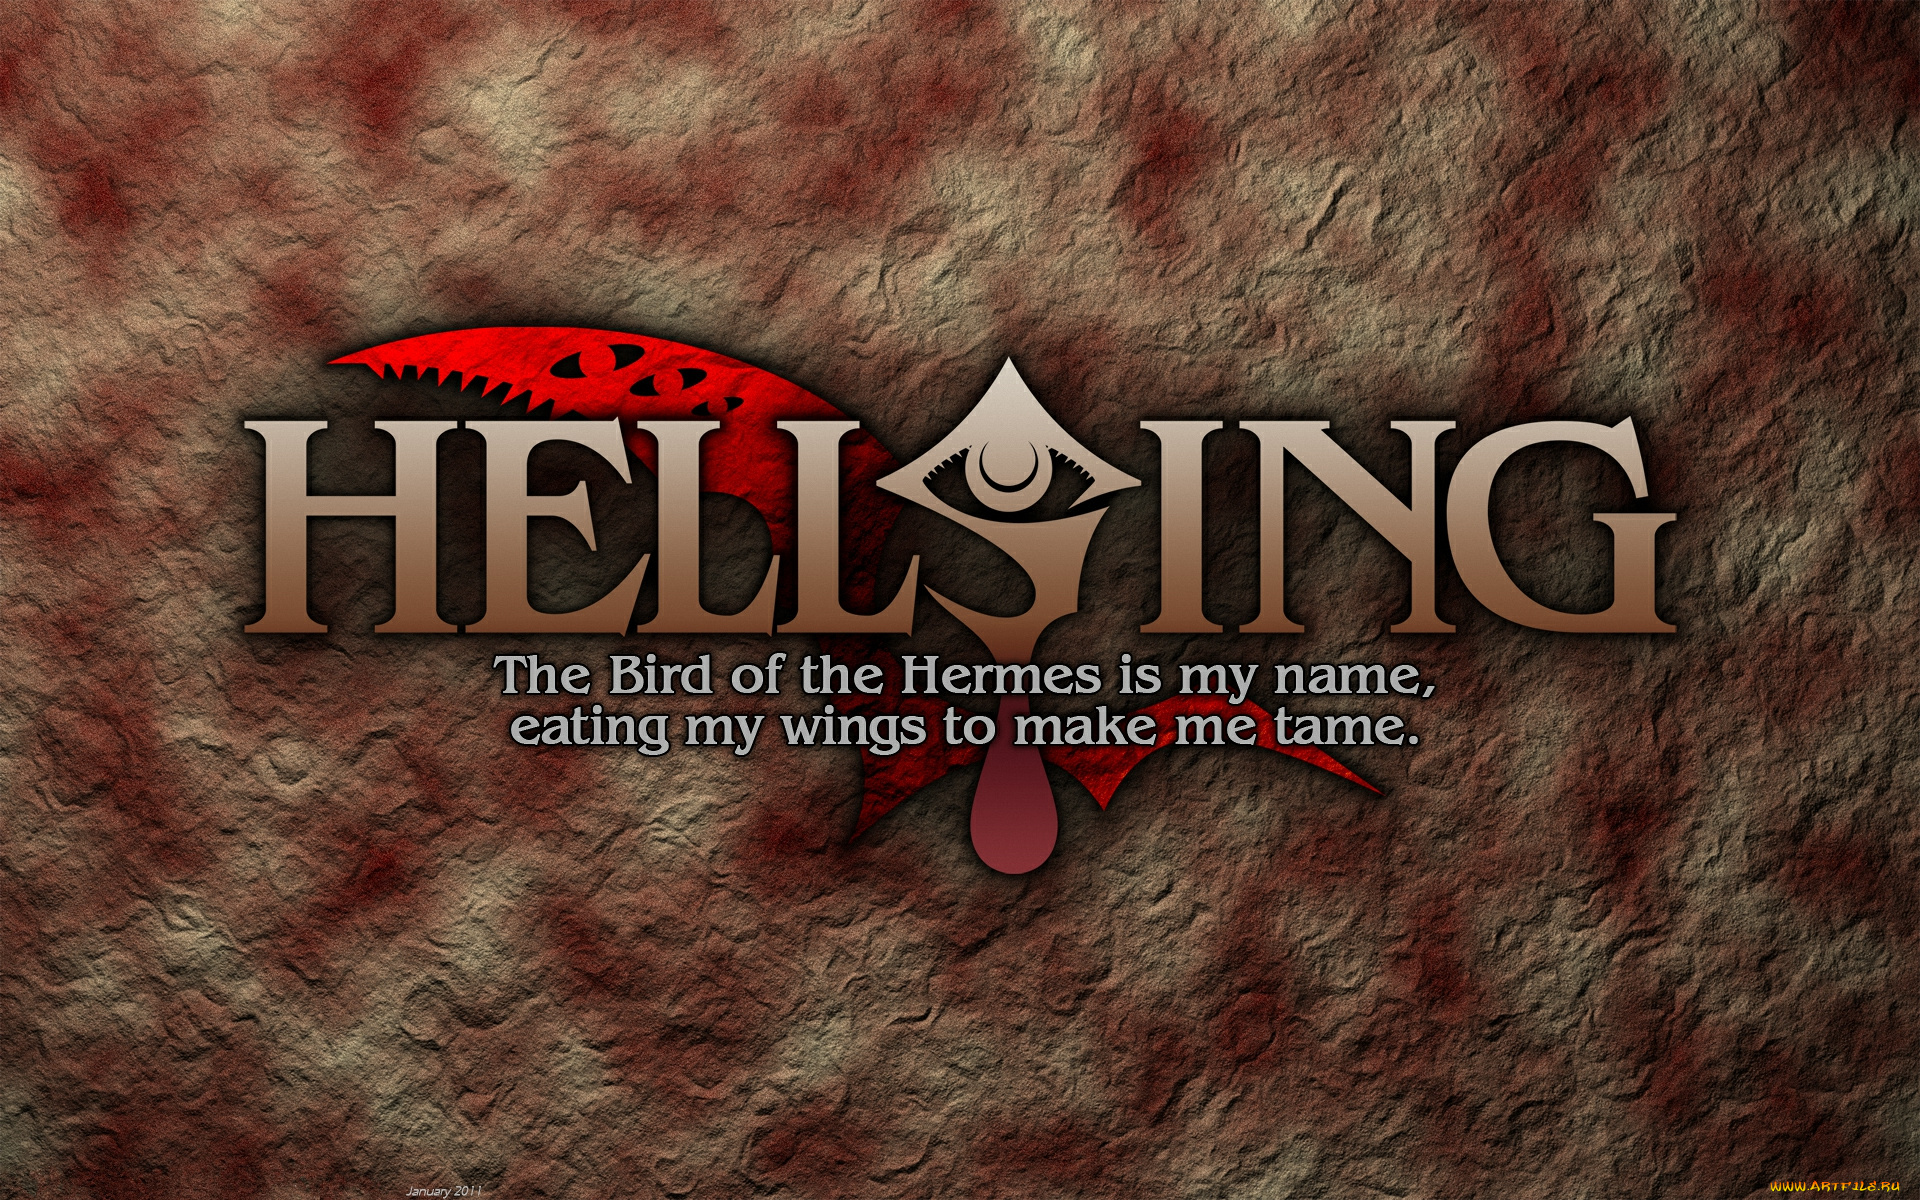 аниме, hellsing